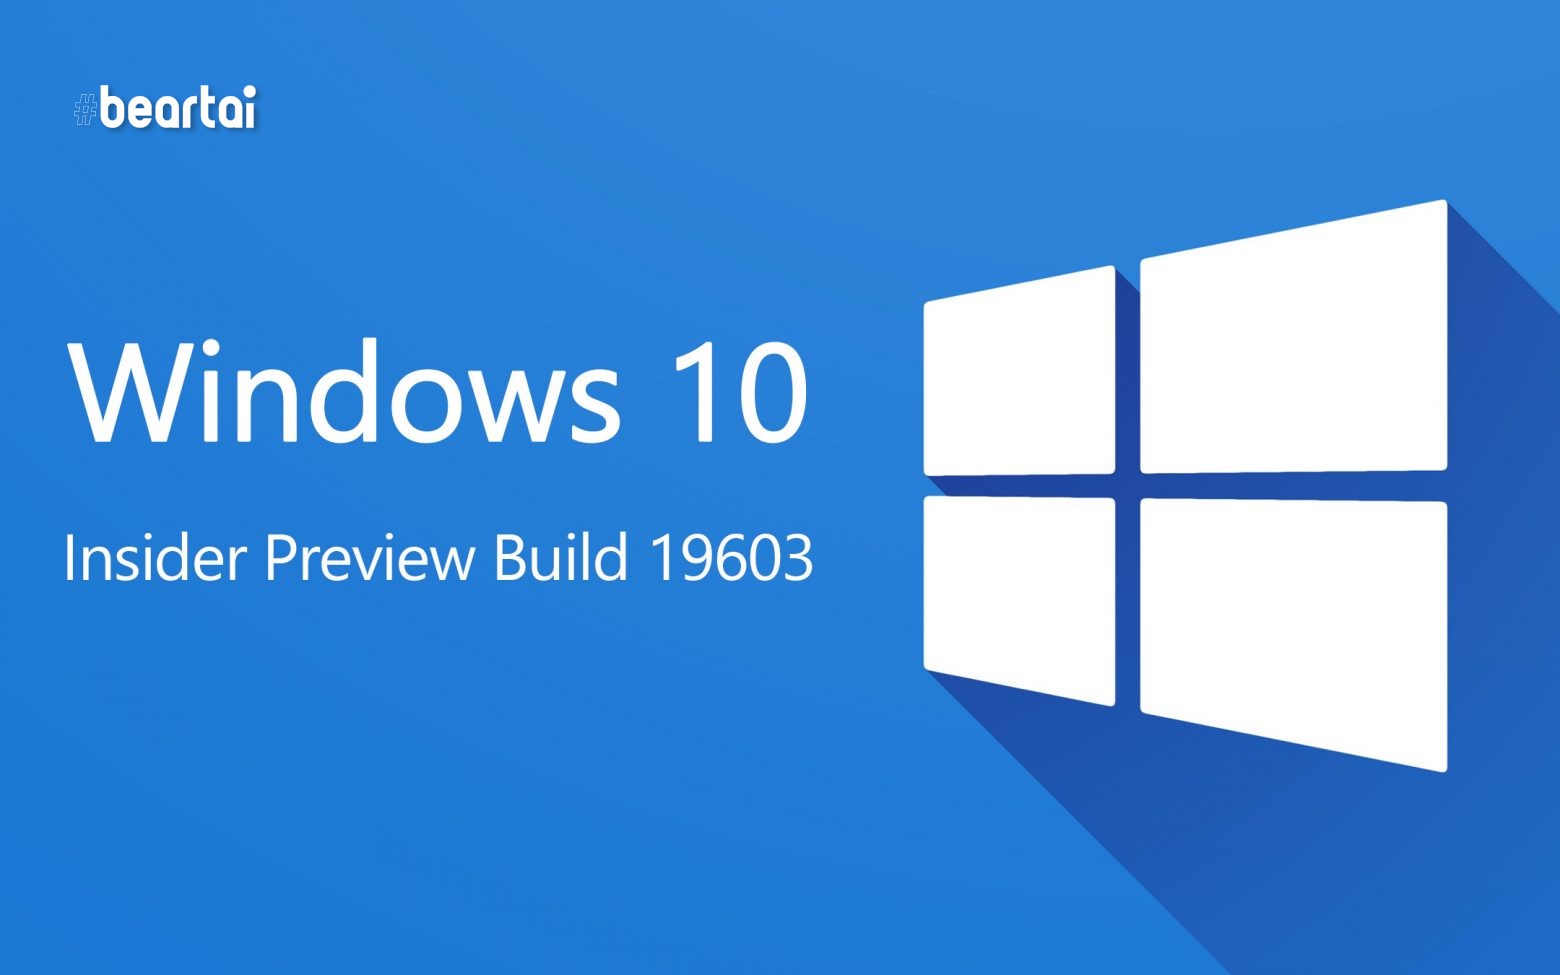 Windows 10 เปิดตัว Insider Preview 19603 ช่วยให้ File Explorer เข้าถึงไฟล์ลินุกซ์ง่ายขึ้น